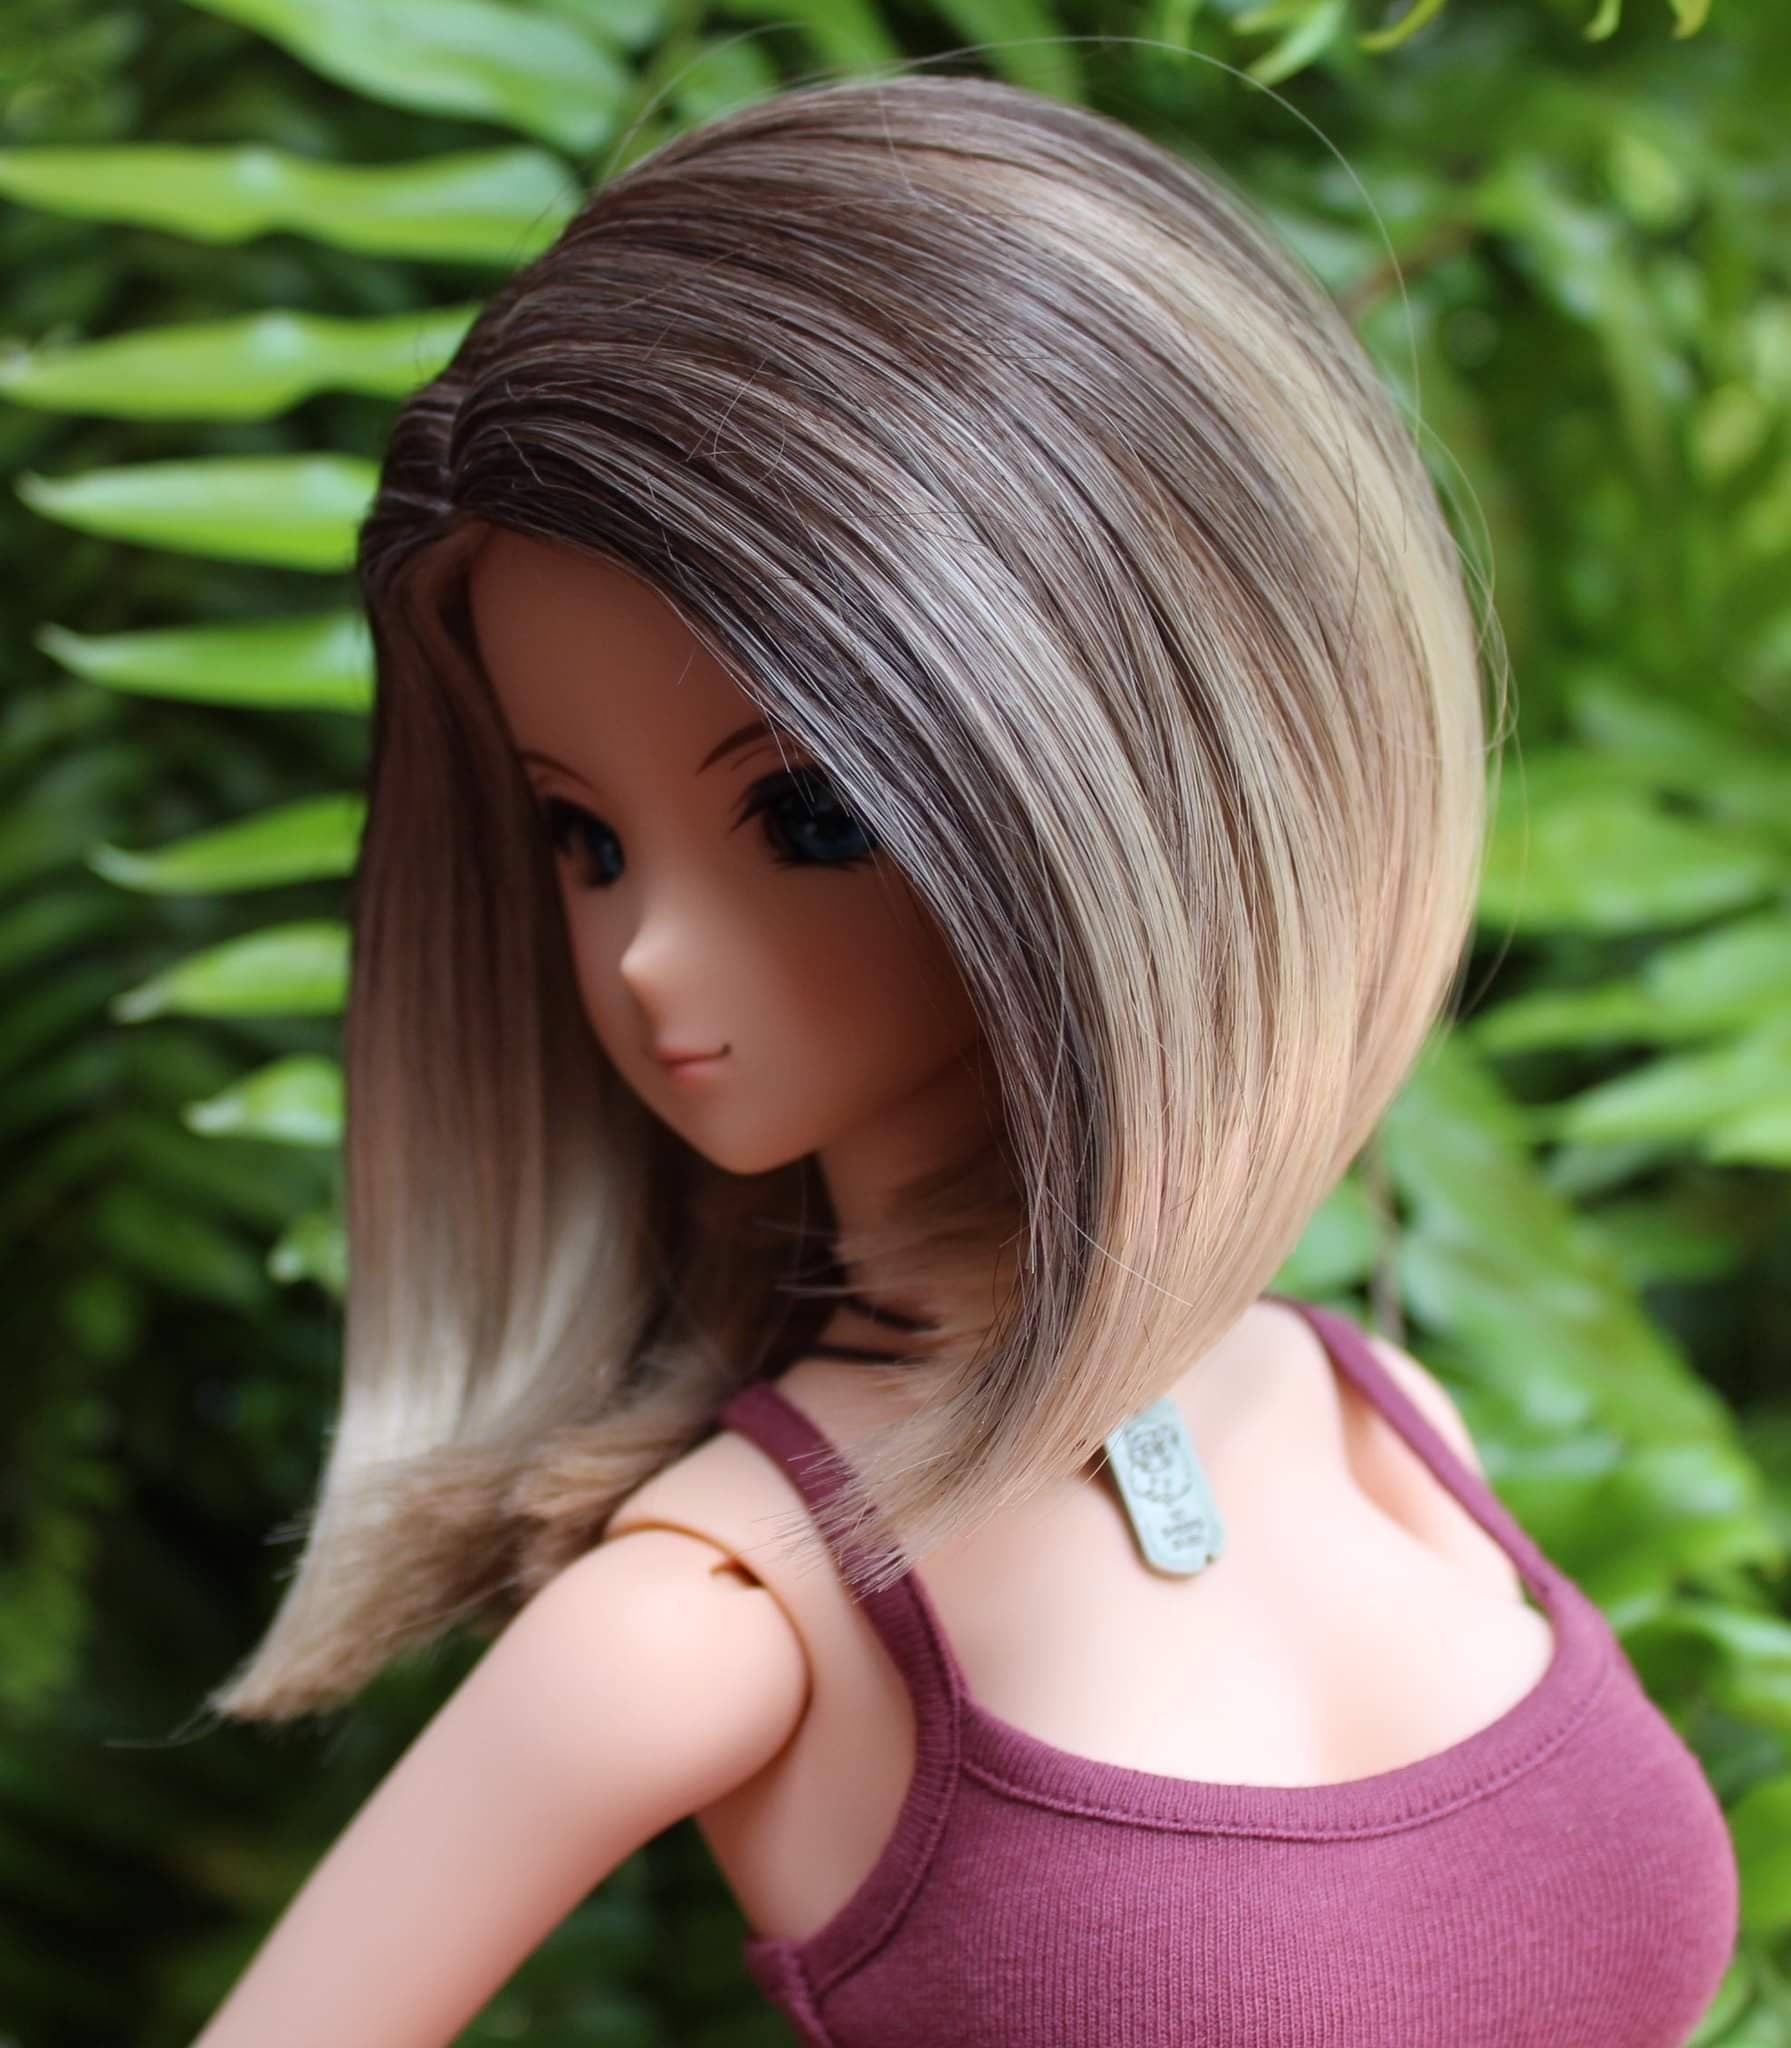 Custom doll Wig for Smart Dolls- "TAN CAPS" 8.5" head size of Bjd, SD, Dollfie Dream dolls  blonde ombre